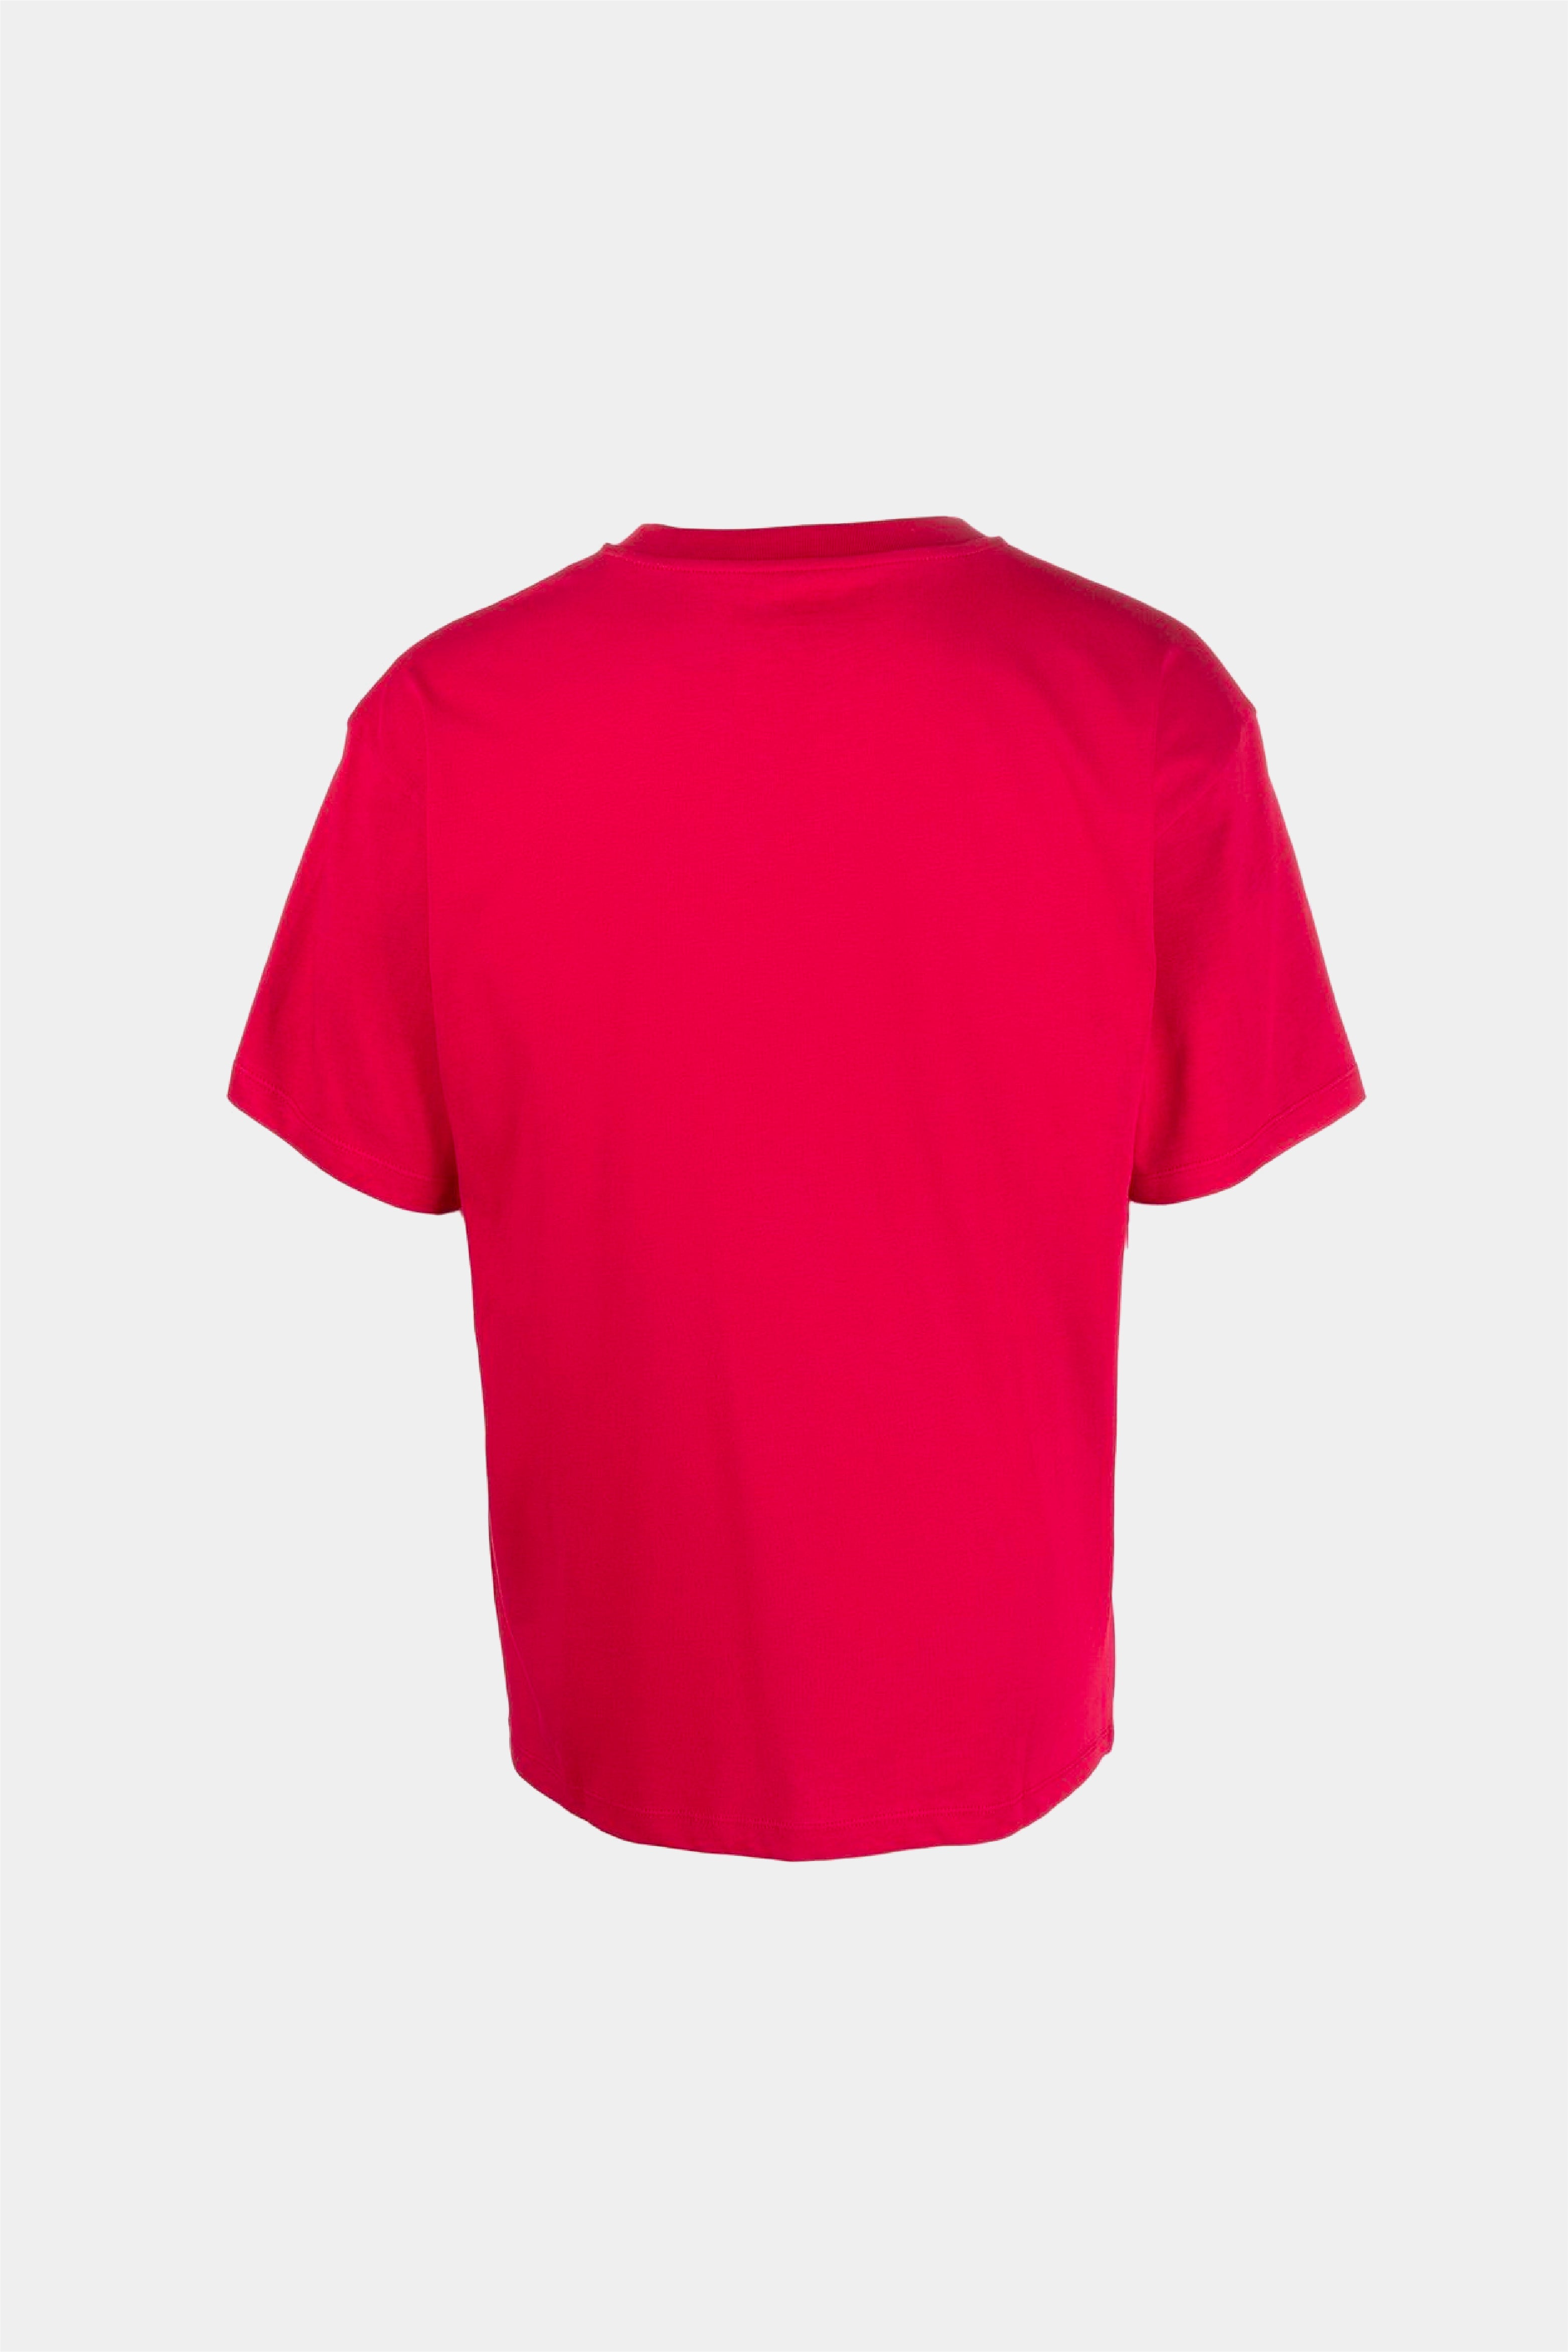 Selectshop FRAME - RASSVET Skull Tee T-Shirts Dubai